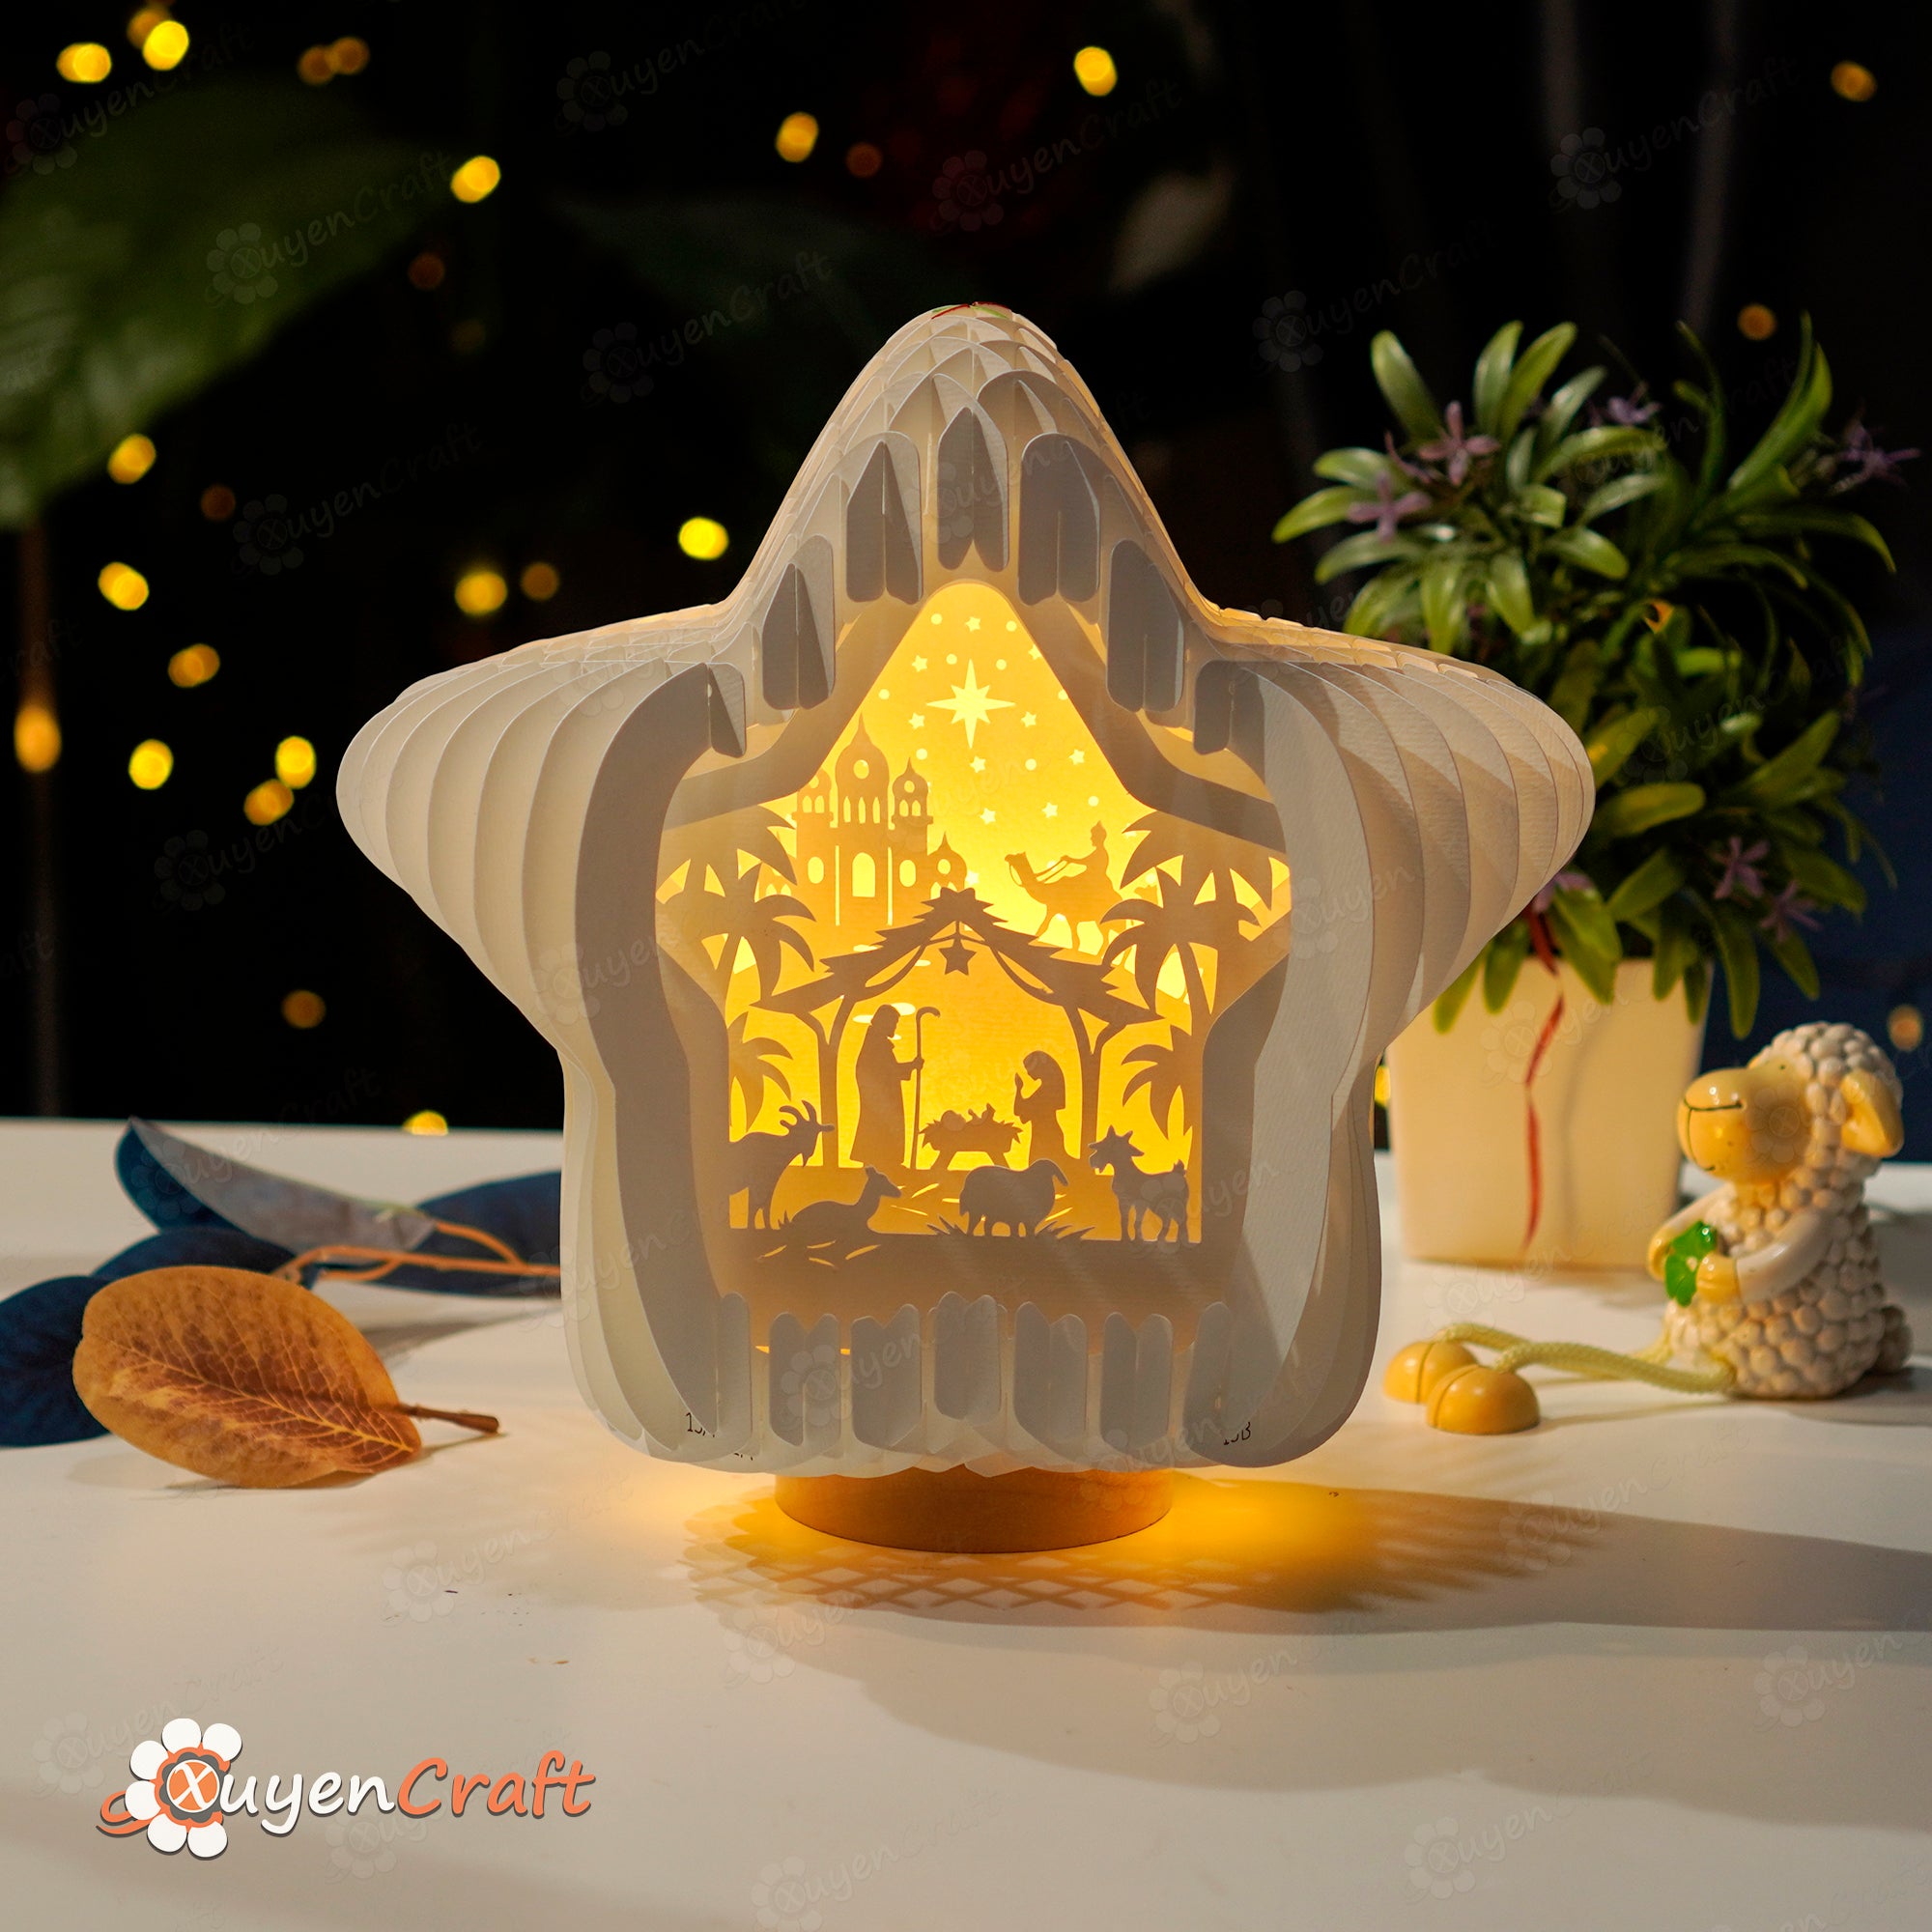 Pack 4 Star Pop Up SVG, Silhouette Templates, Star Lanterns for Merry Christmas Decor, Nativity Scene, Santa claus, DIY Paper Cut Lamp